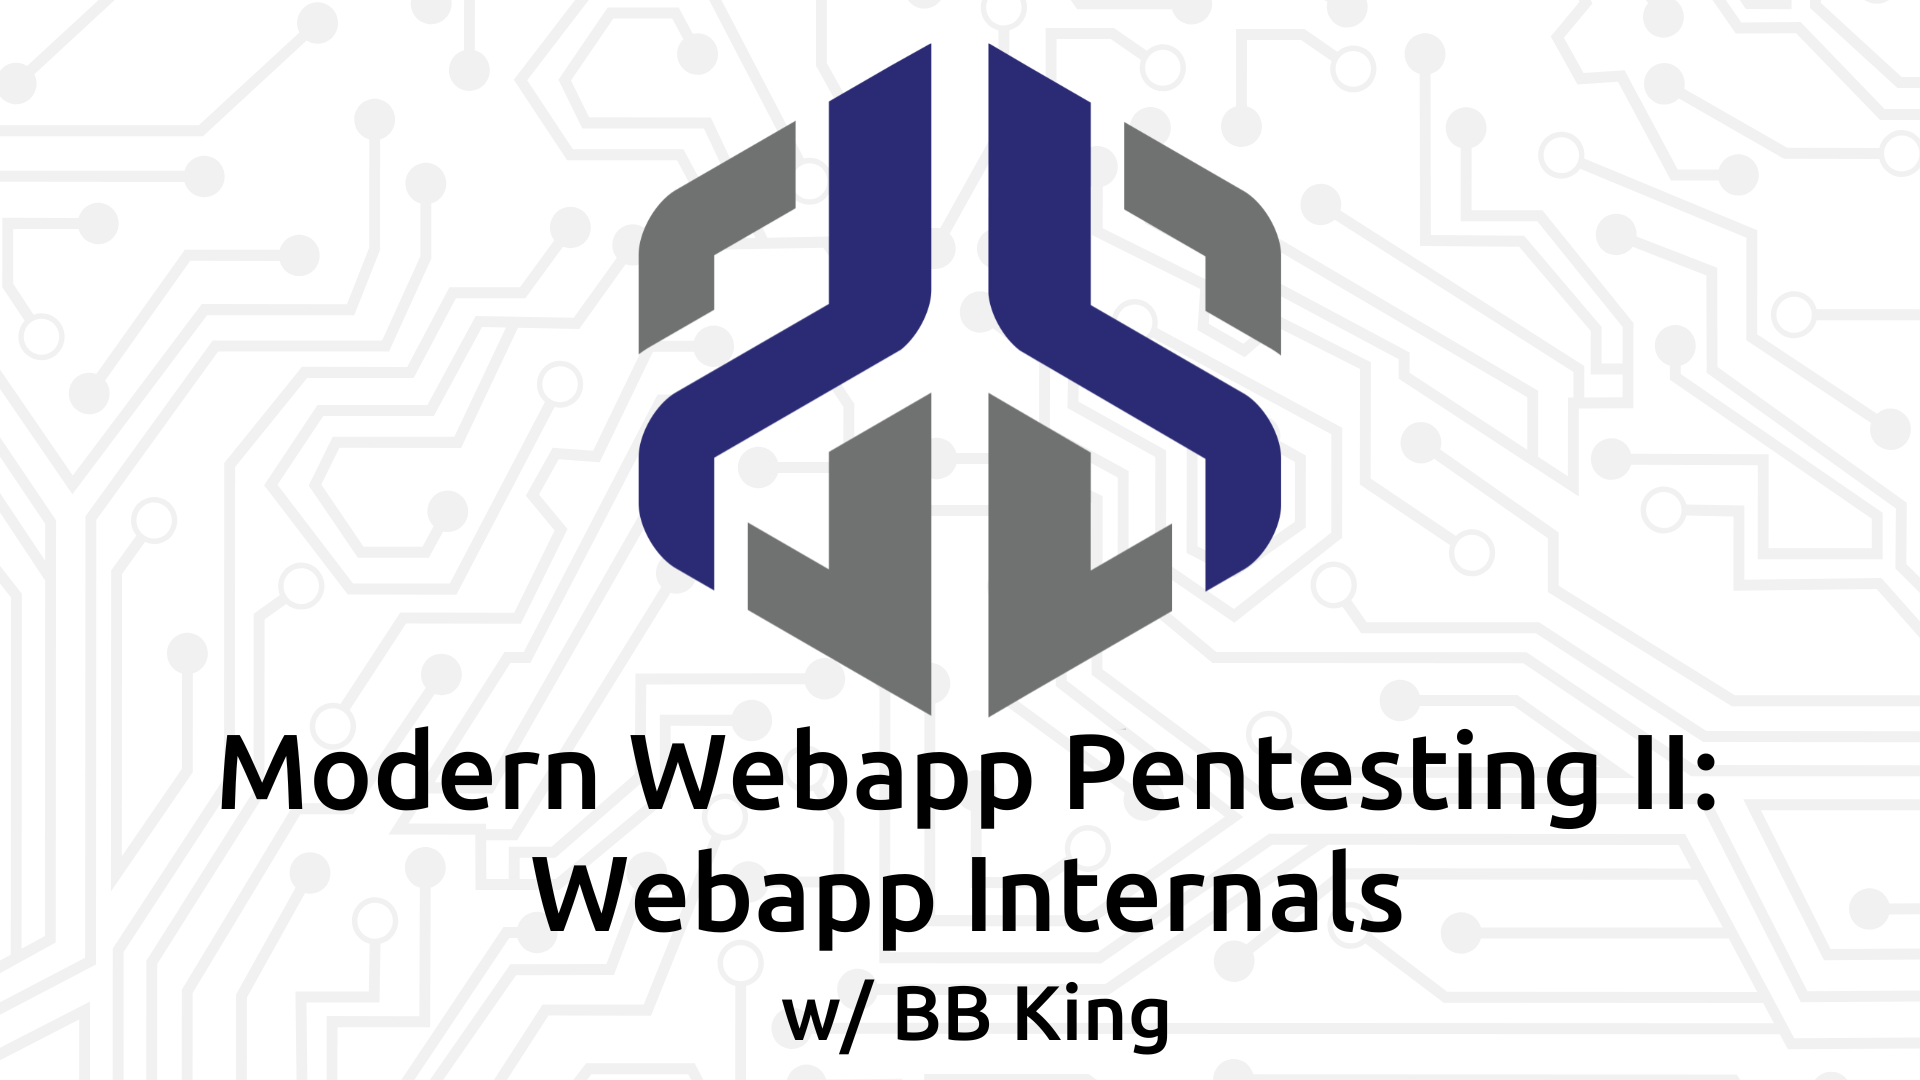 Modern Webapp Pentesting II Web Internals